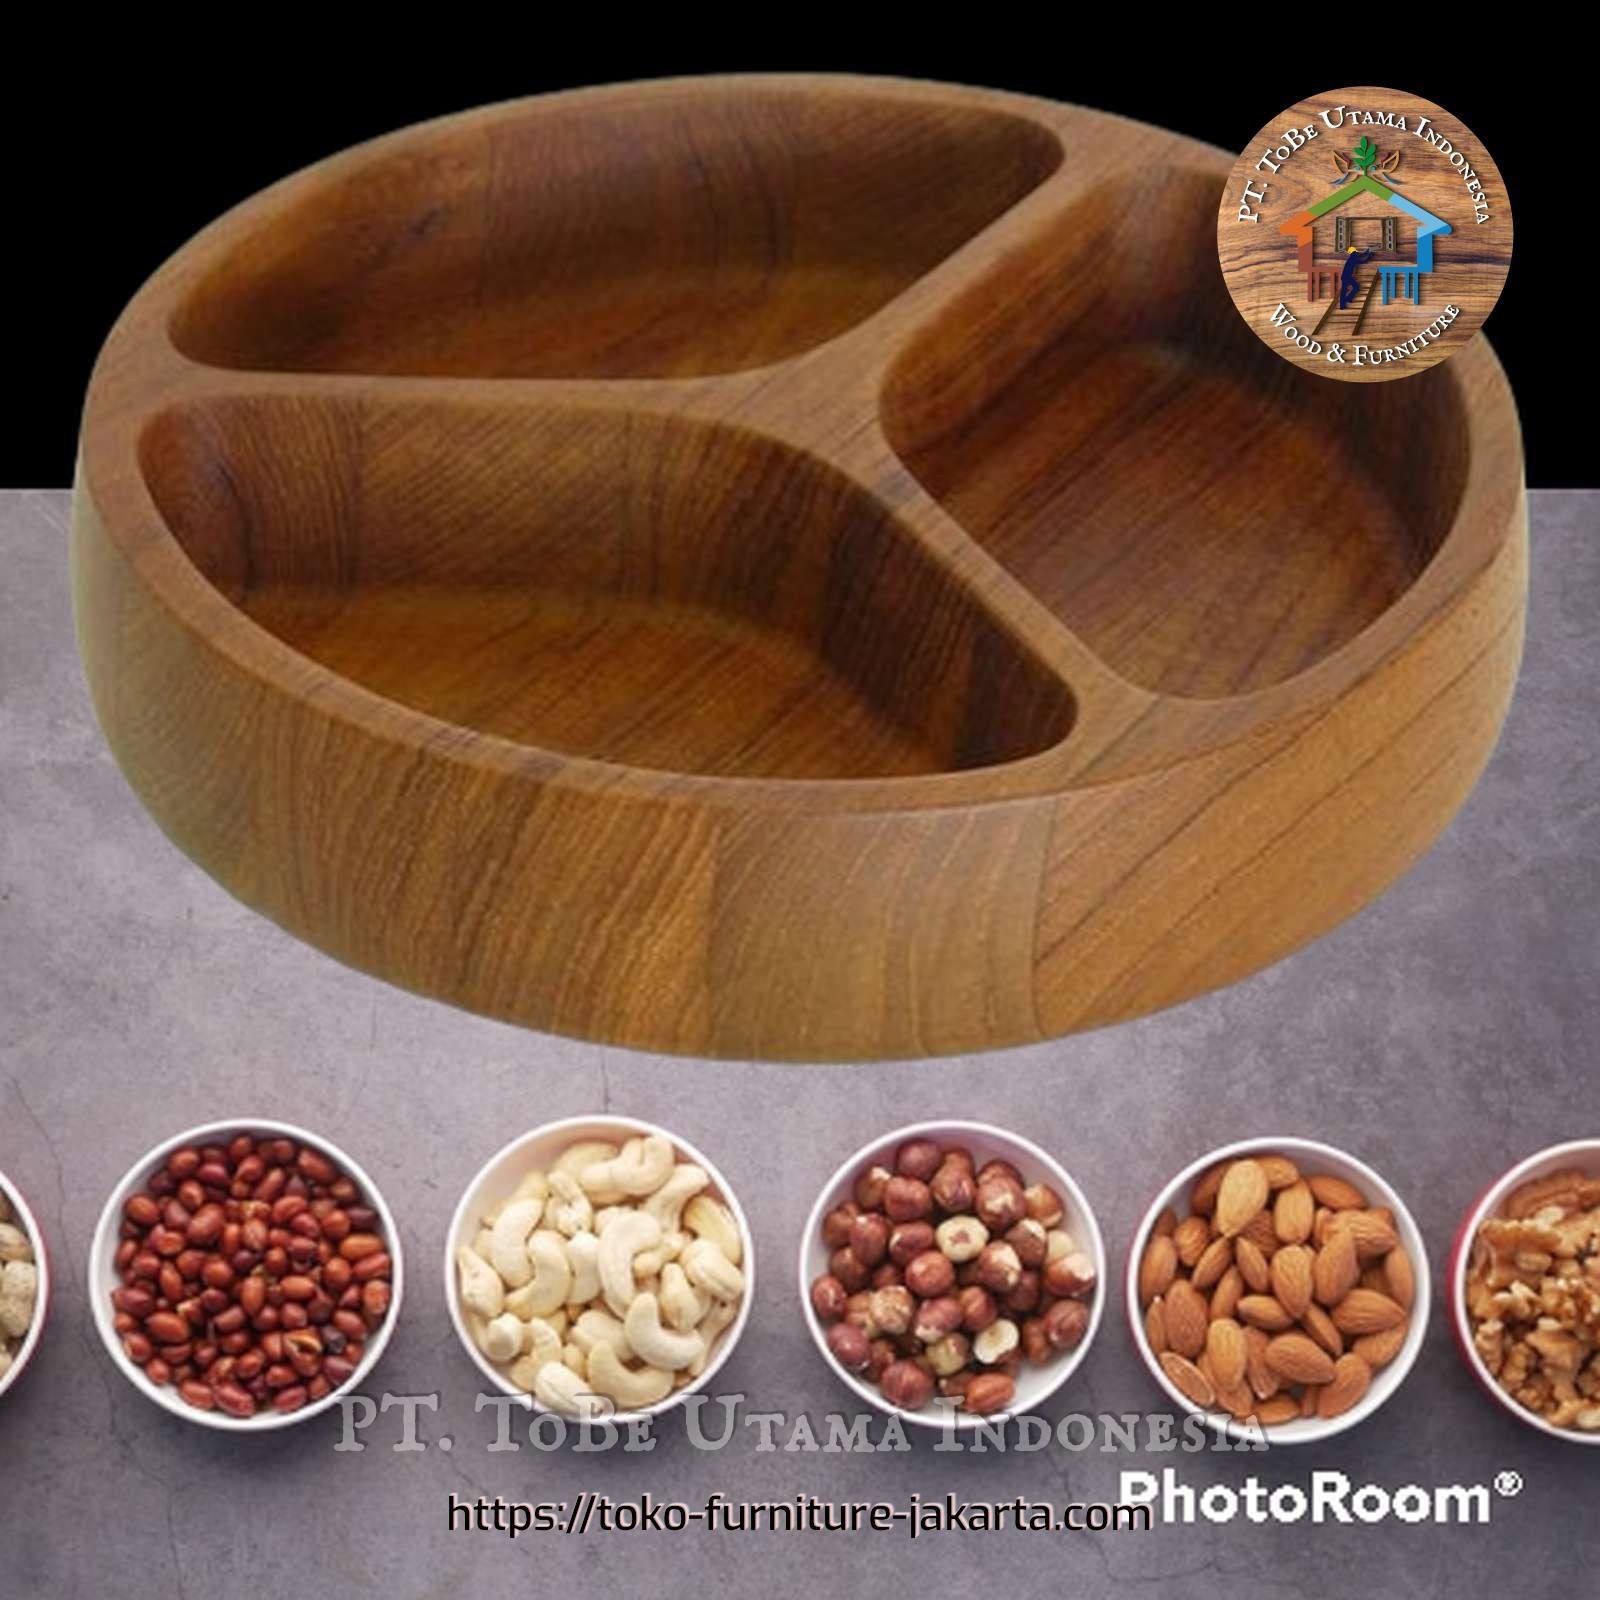 Kitchenware: Nuts Placemen made of teakwood, mahogany wood (image 1 of 2).